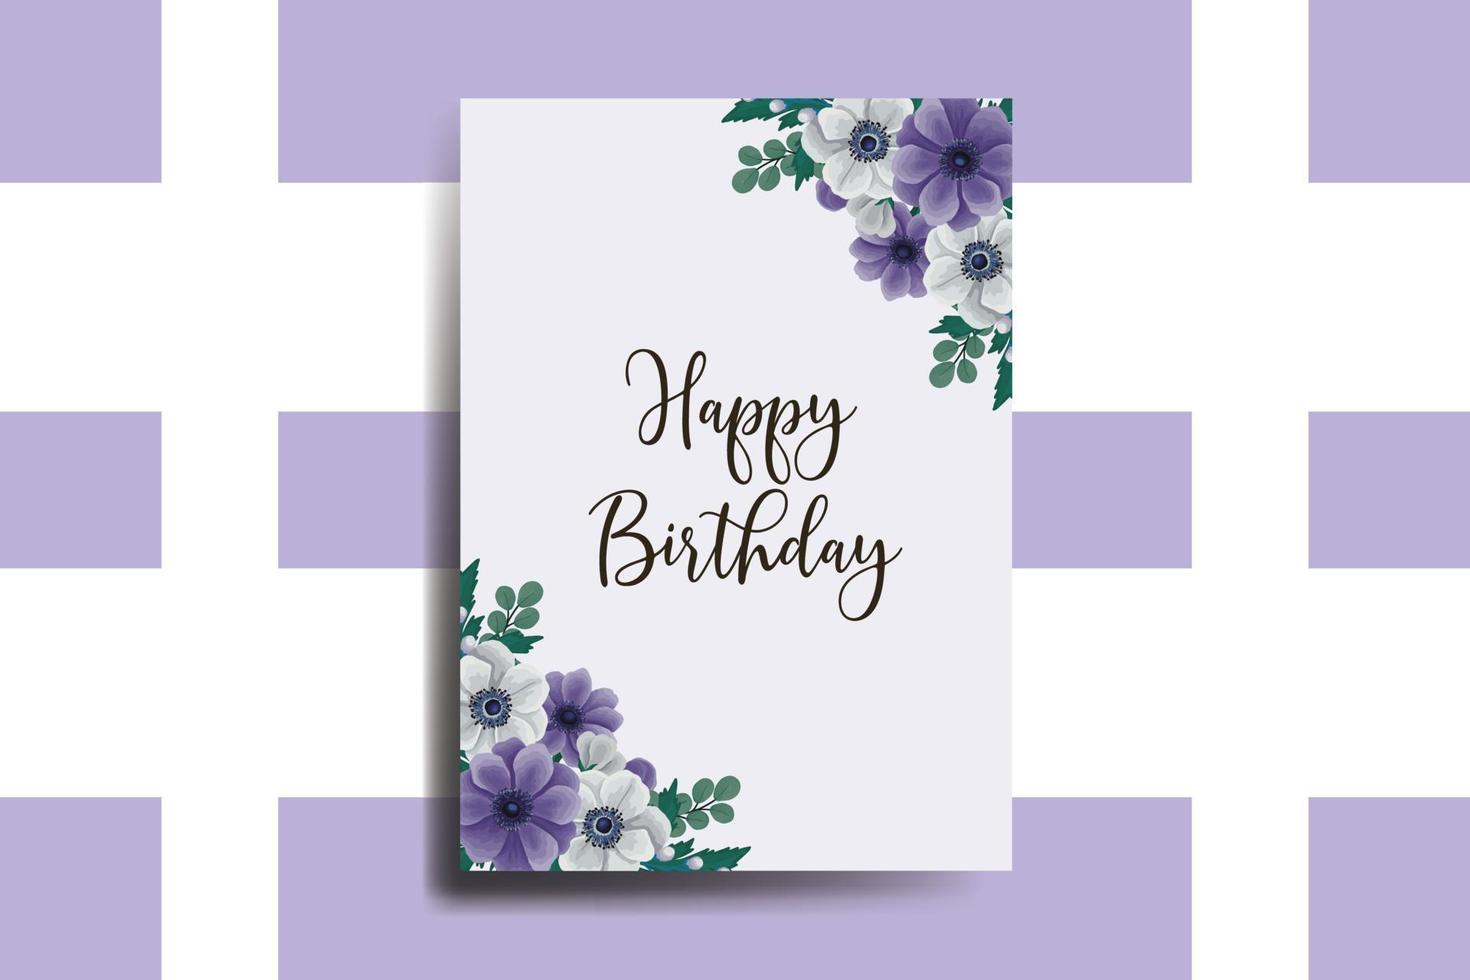 saludo tarjeta cumpleaños tarjeta digital acuarela mano dibujado anémona flor diseño modelo vector